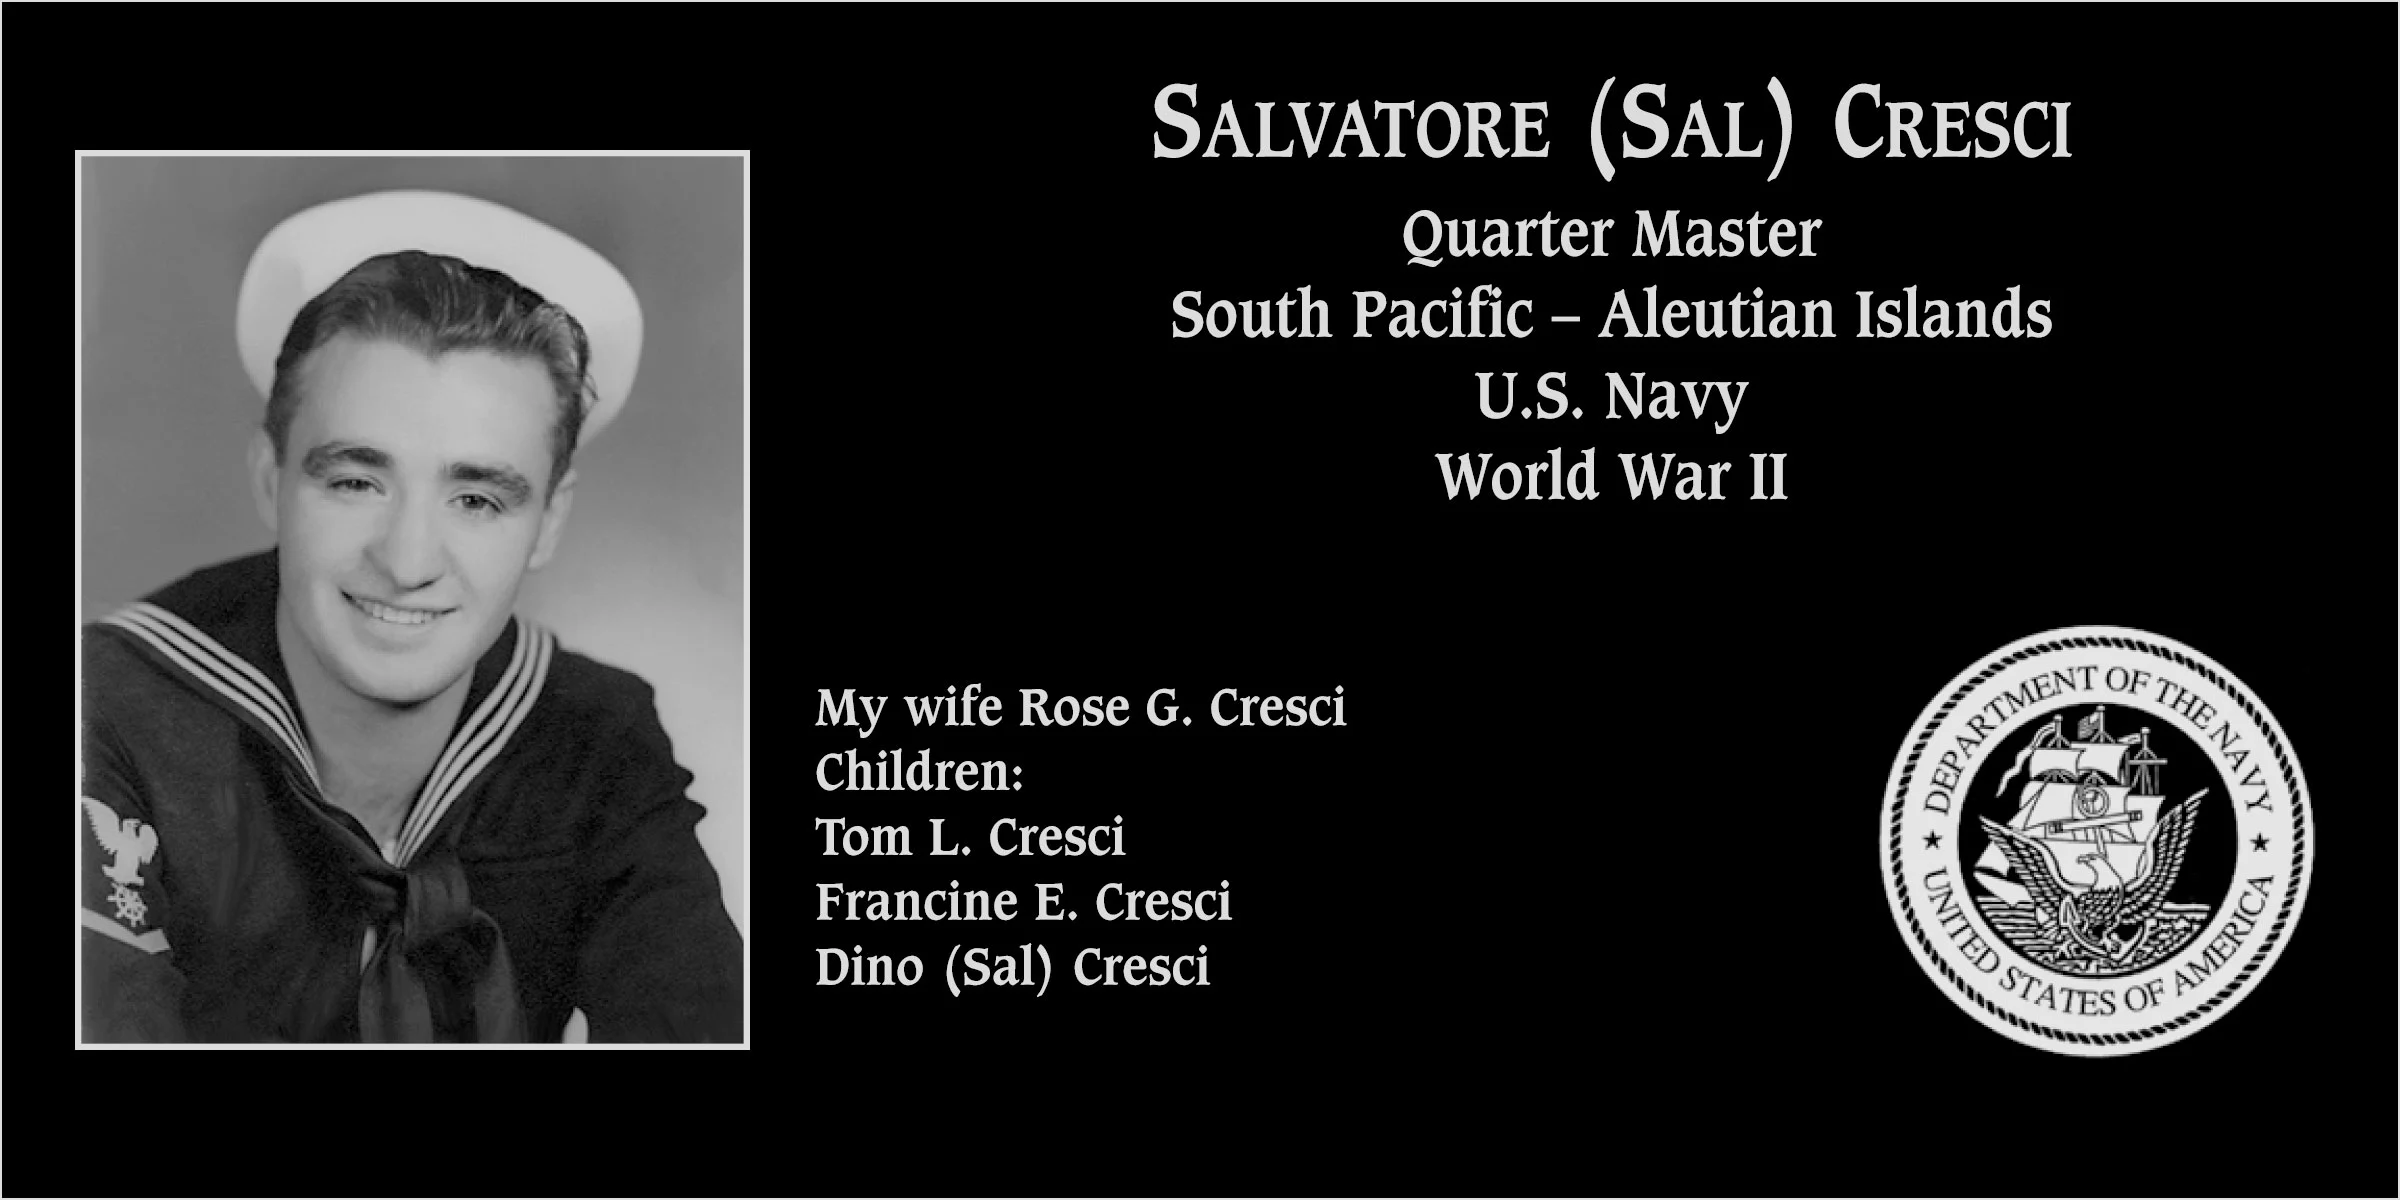 Salvatore “Sal” Cresci